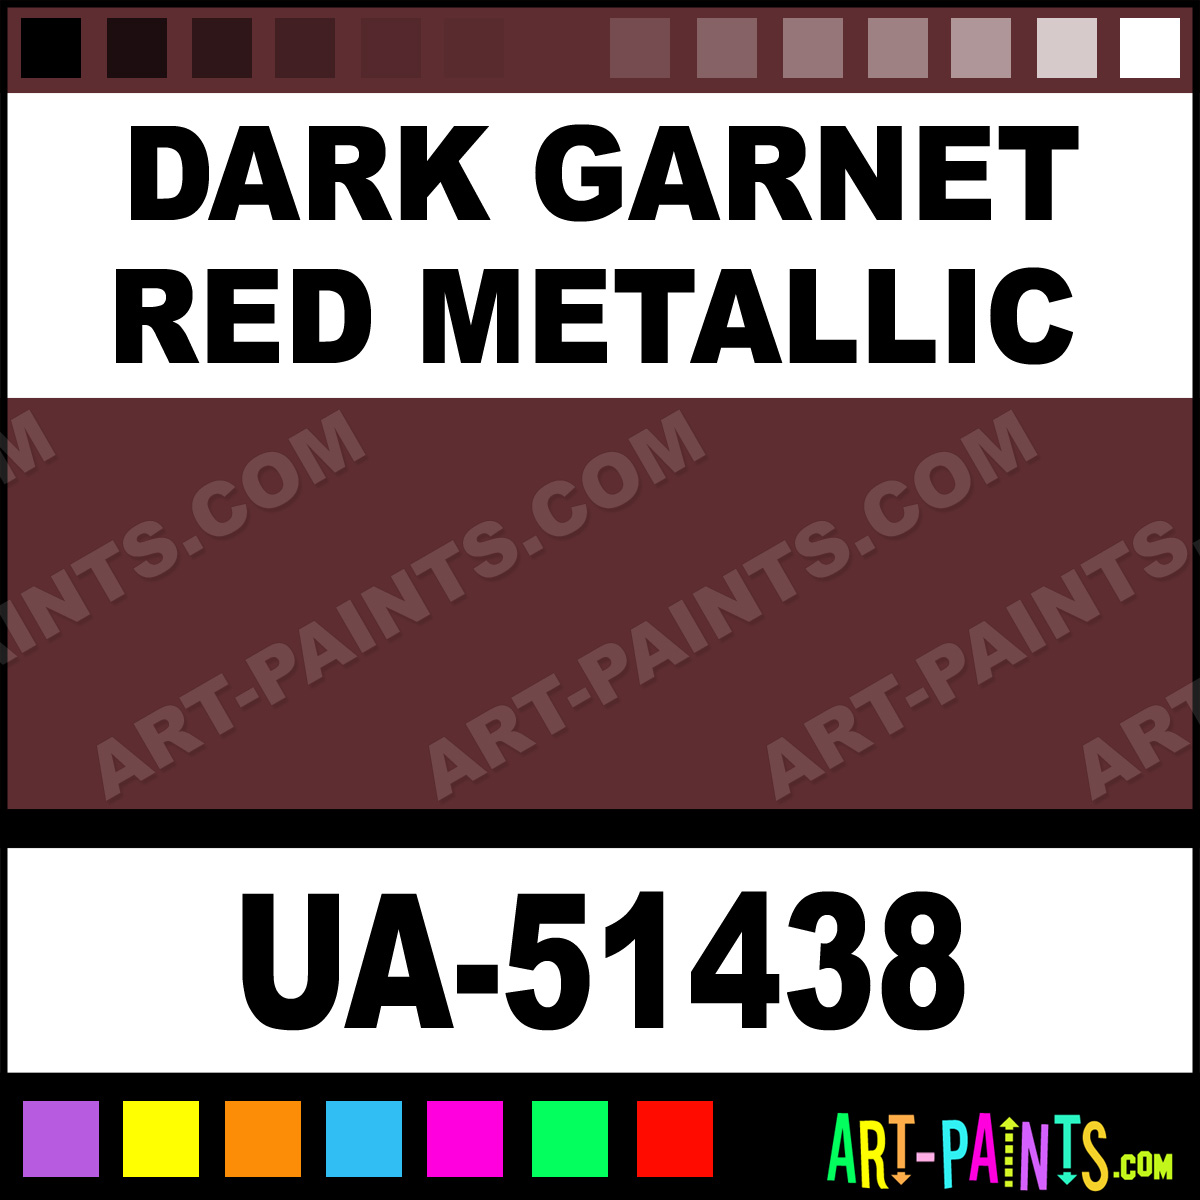 Metallic Garnet